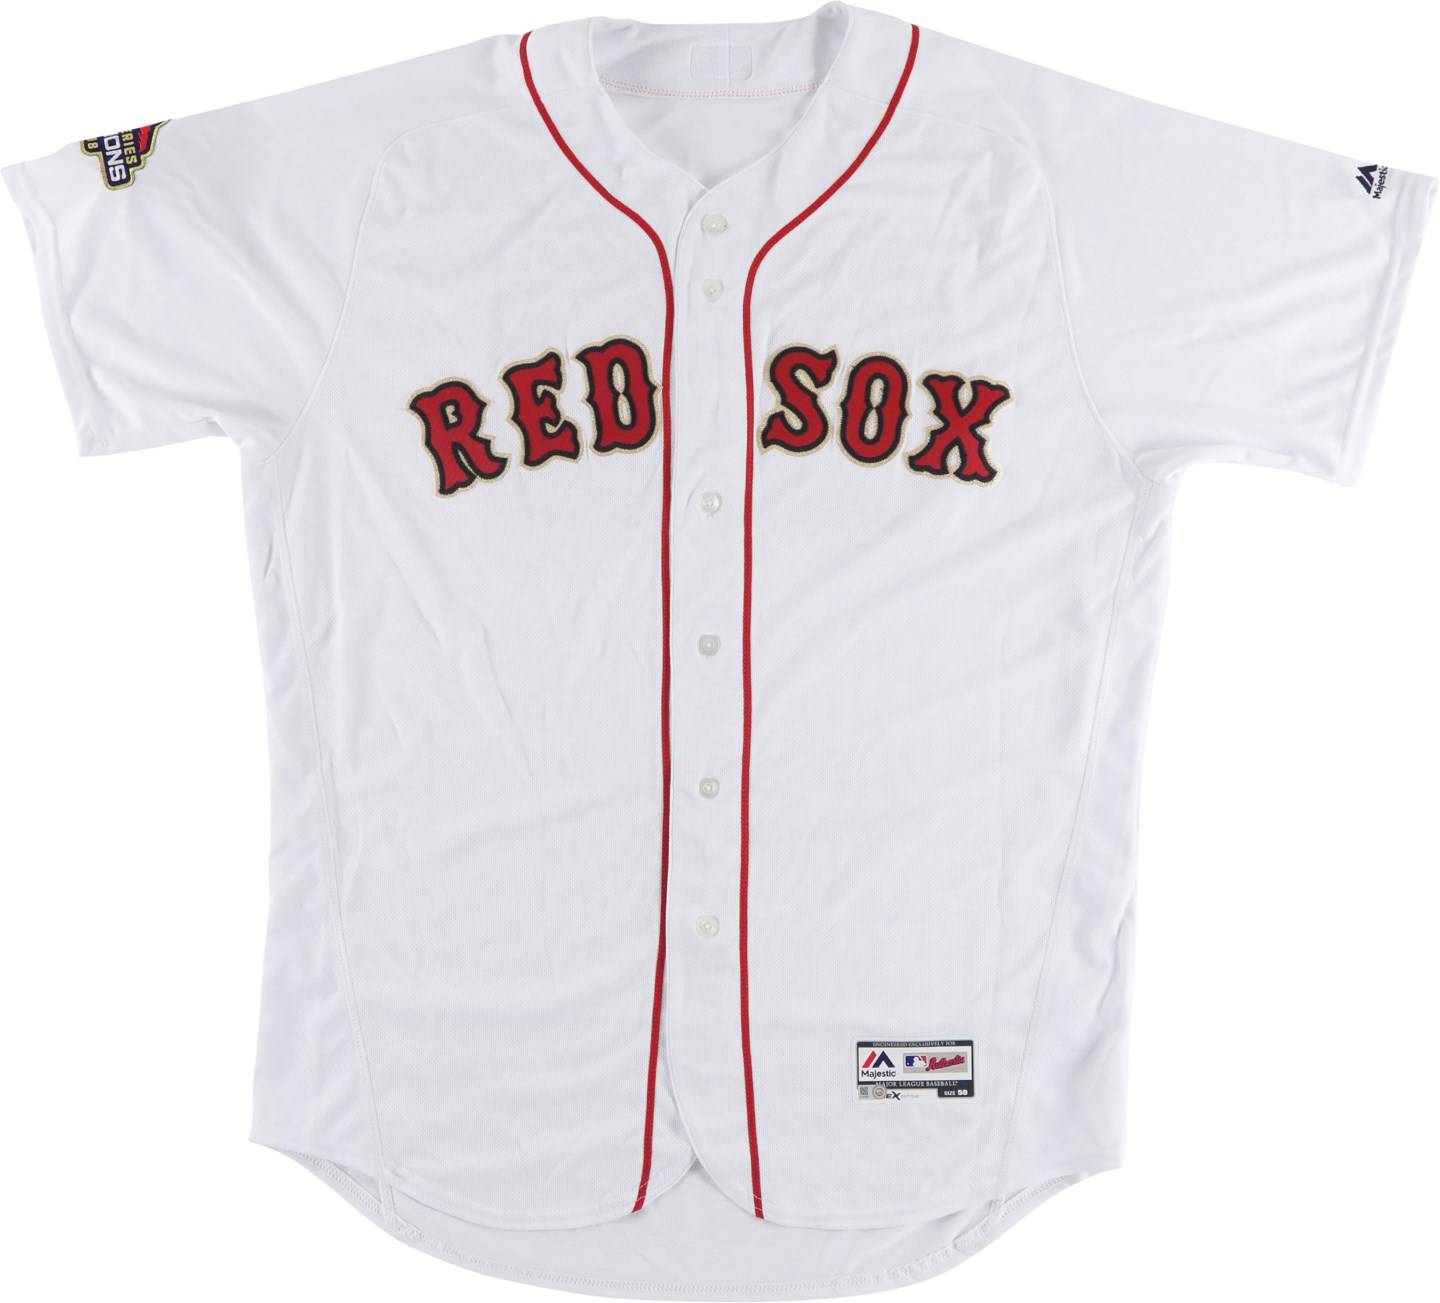 Baseball Equipment - 2019 Jason Varitek Boston Red Sox Jersey Worn During World Championship Ring Ceremony (MLB)